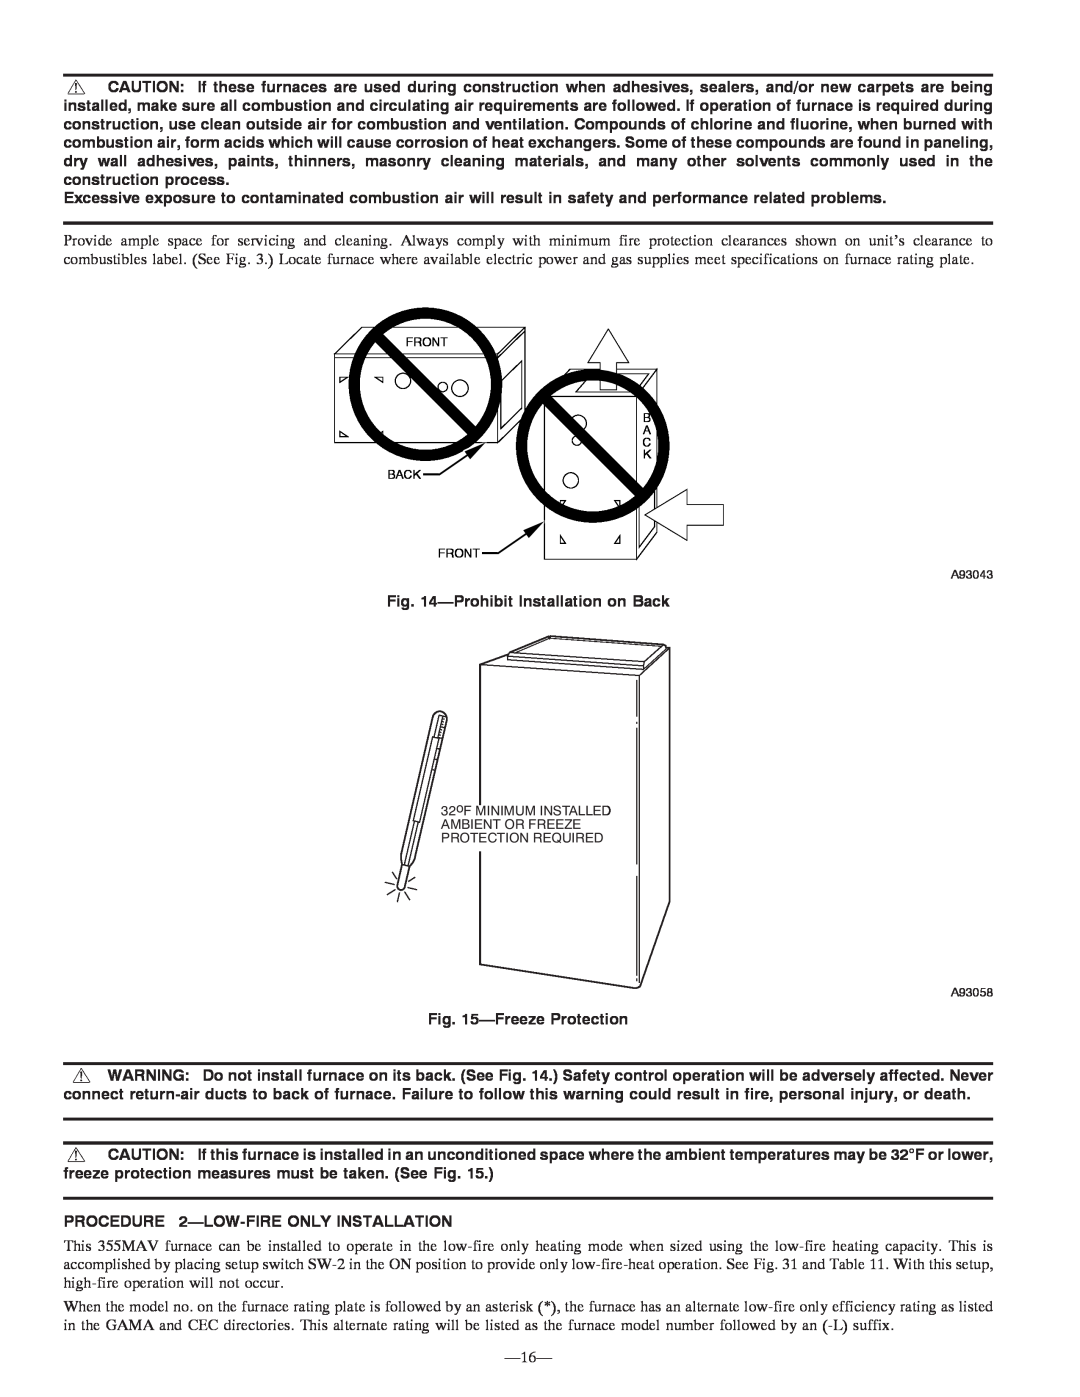 Bryant 355MAV instruction manual ProhibitInstallation on Back, FreezeProtection, PROCEDURE 2-LOW-FIREONLY INSTALLATION 